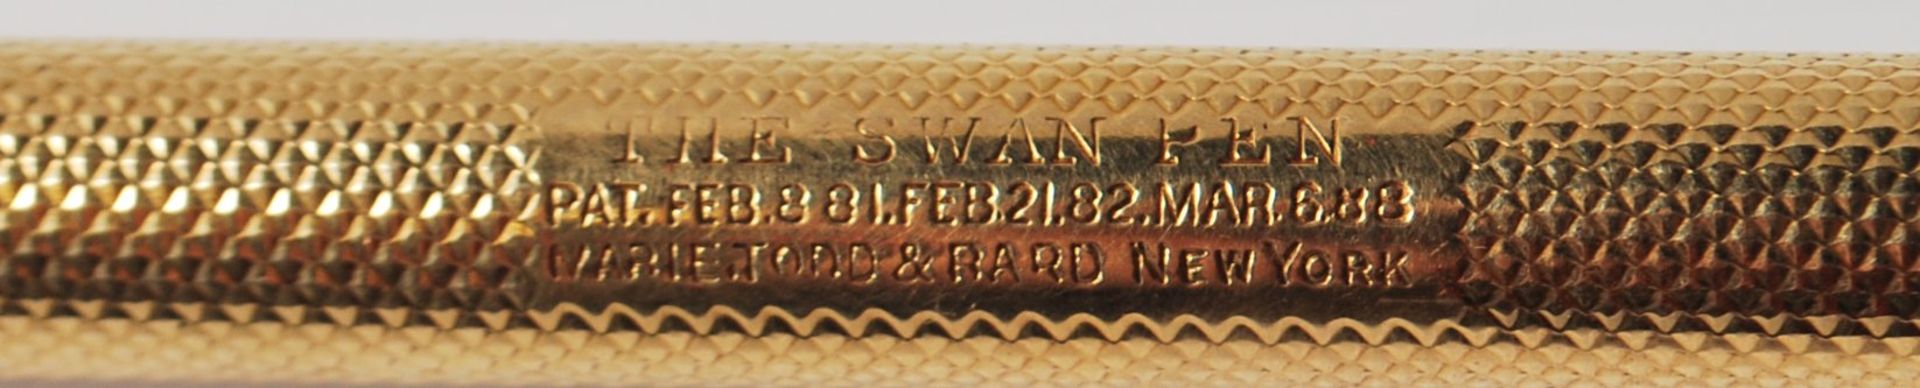 1930'S MABIE TODD & BARD SWAN PEN IN BOX - Image 4 of 7